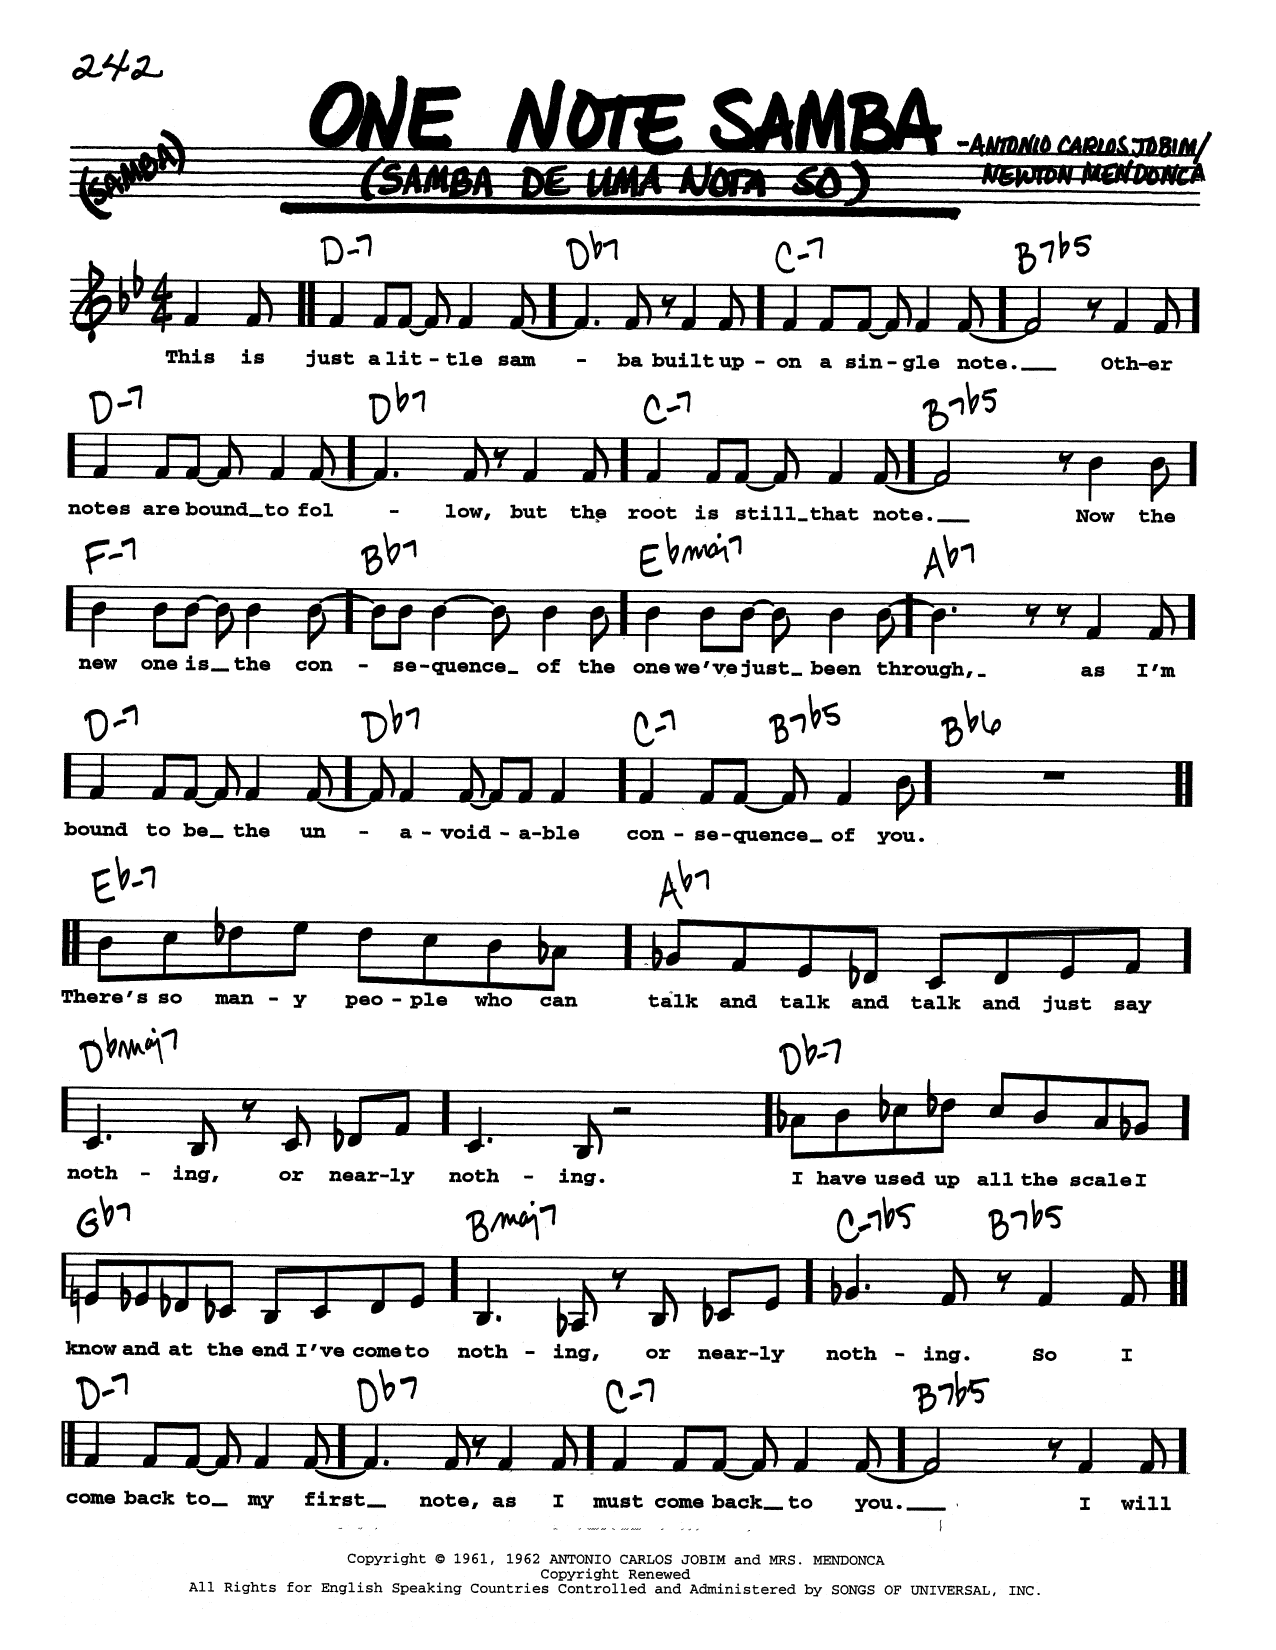 Download Antonio Carlos Jobim One Note Samba (Samba De Uma Nota So) (Low Voice) Sheet Music and learn how to play Real Book – Melody, Lyrics & Chords PDF digital score in minutes